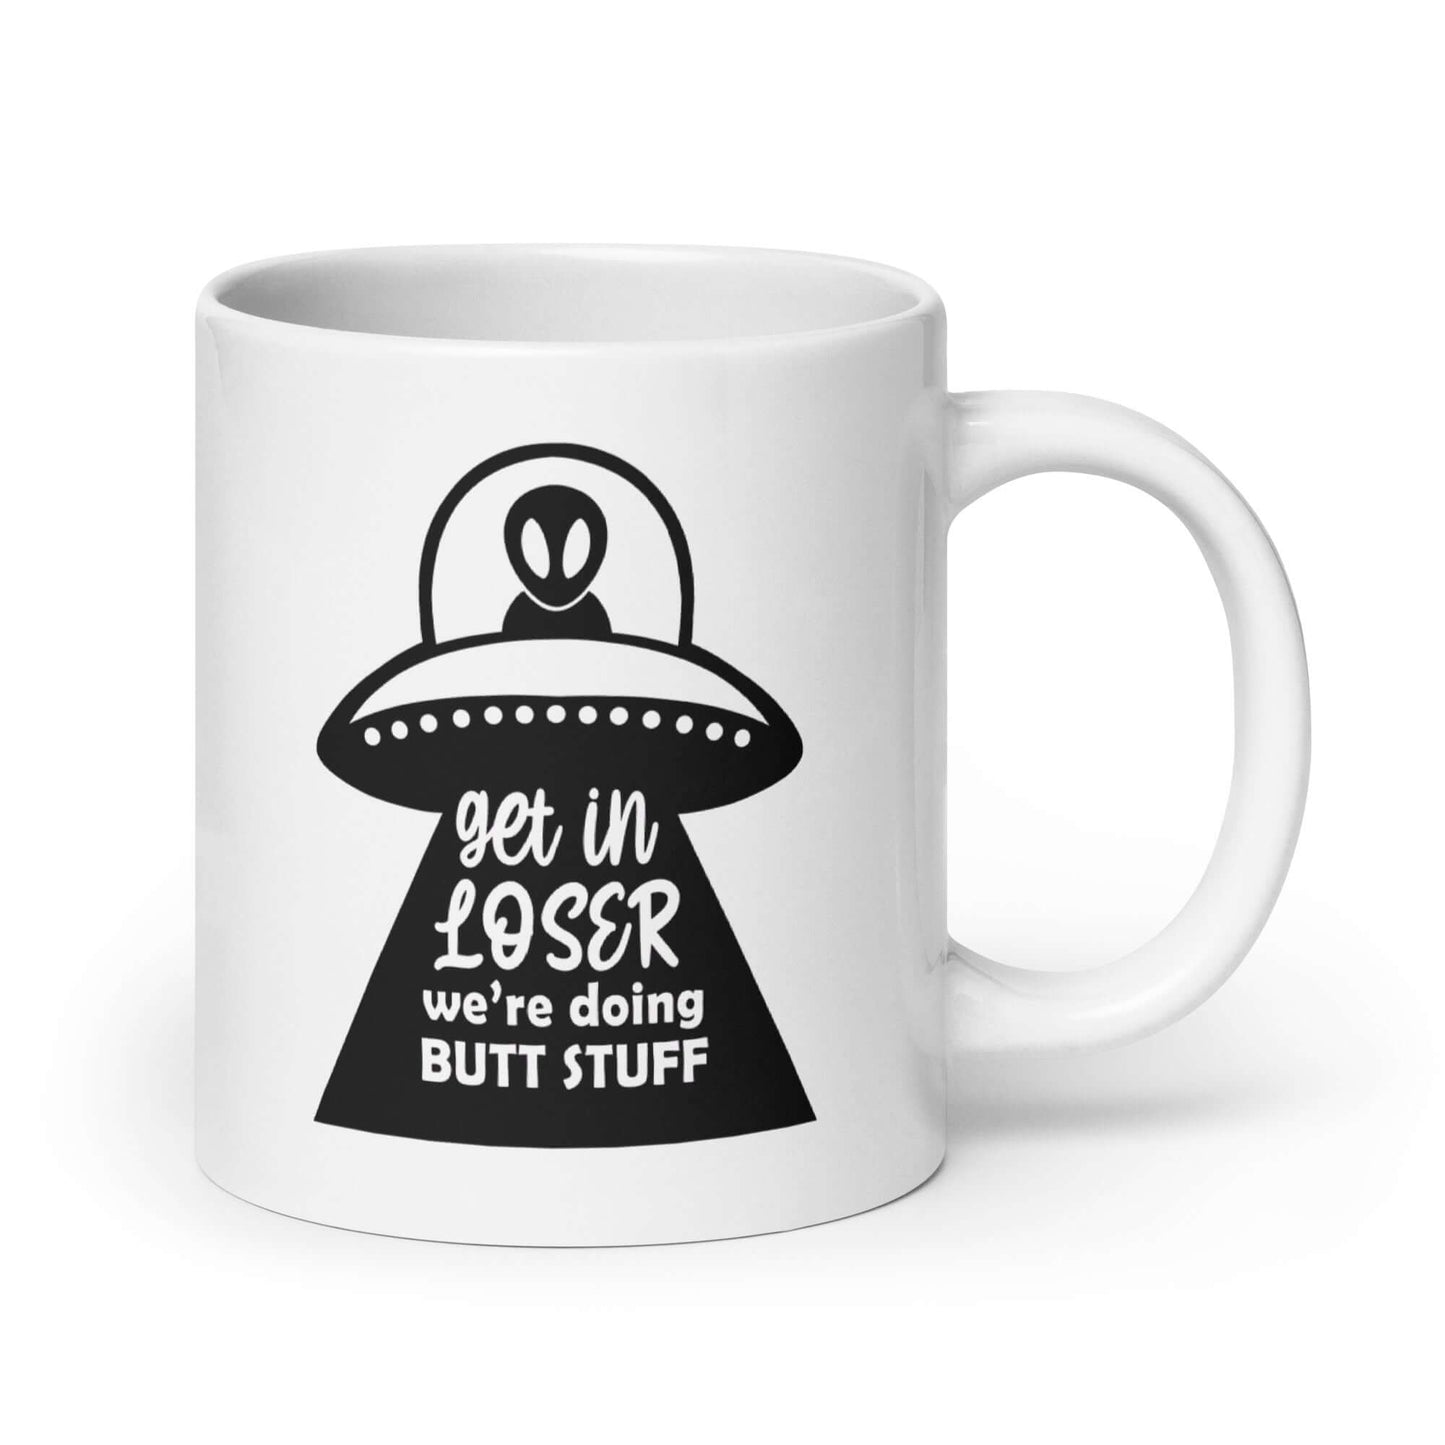 Get in loser funny alien abduction anal probing joke mug